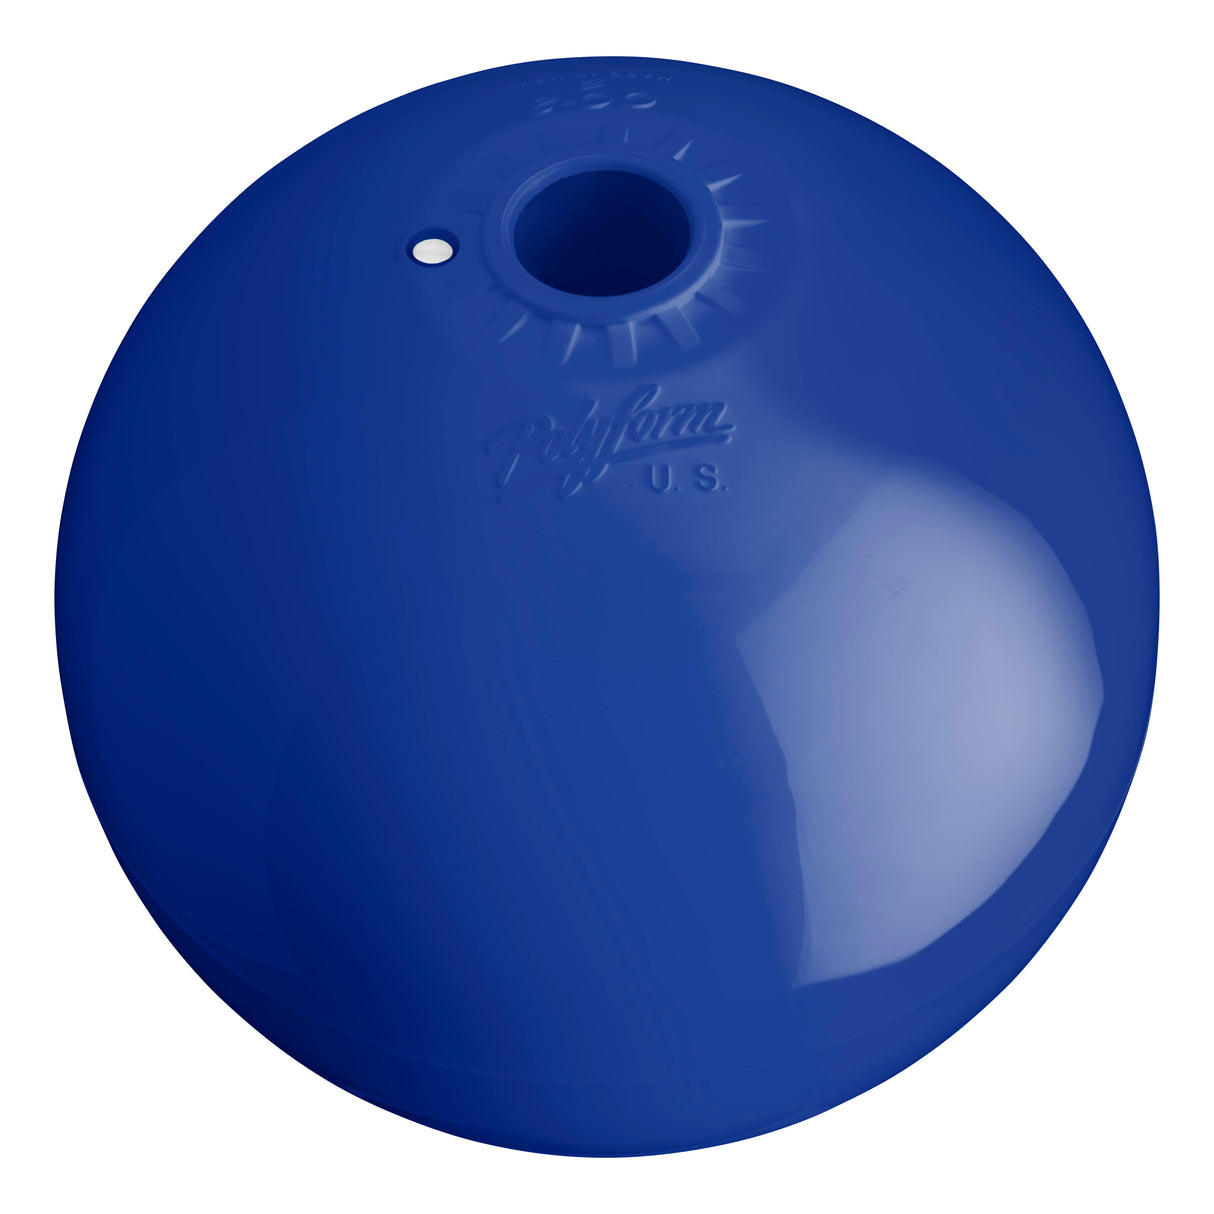 Hole through center mooring and marker buoy, Polyform CC-4 Cobalt Blue angled shot